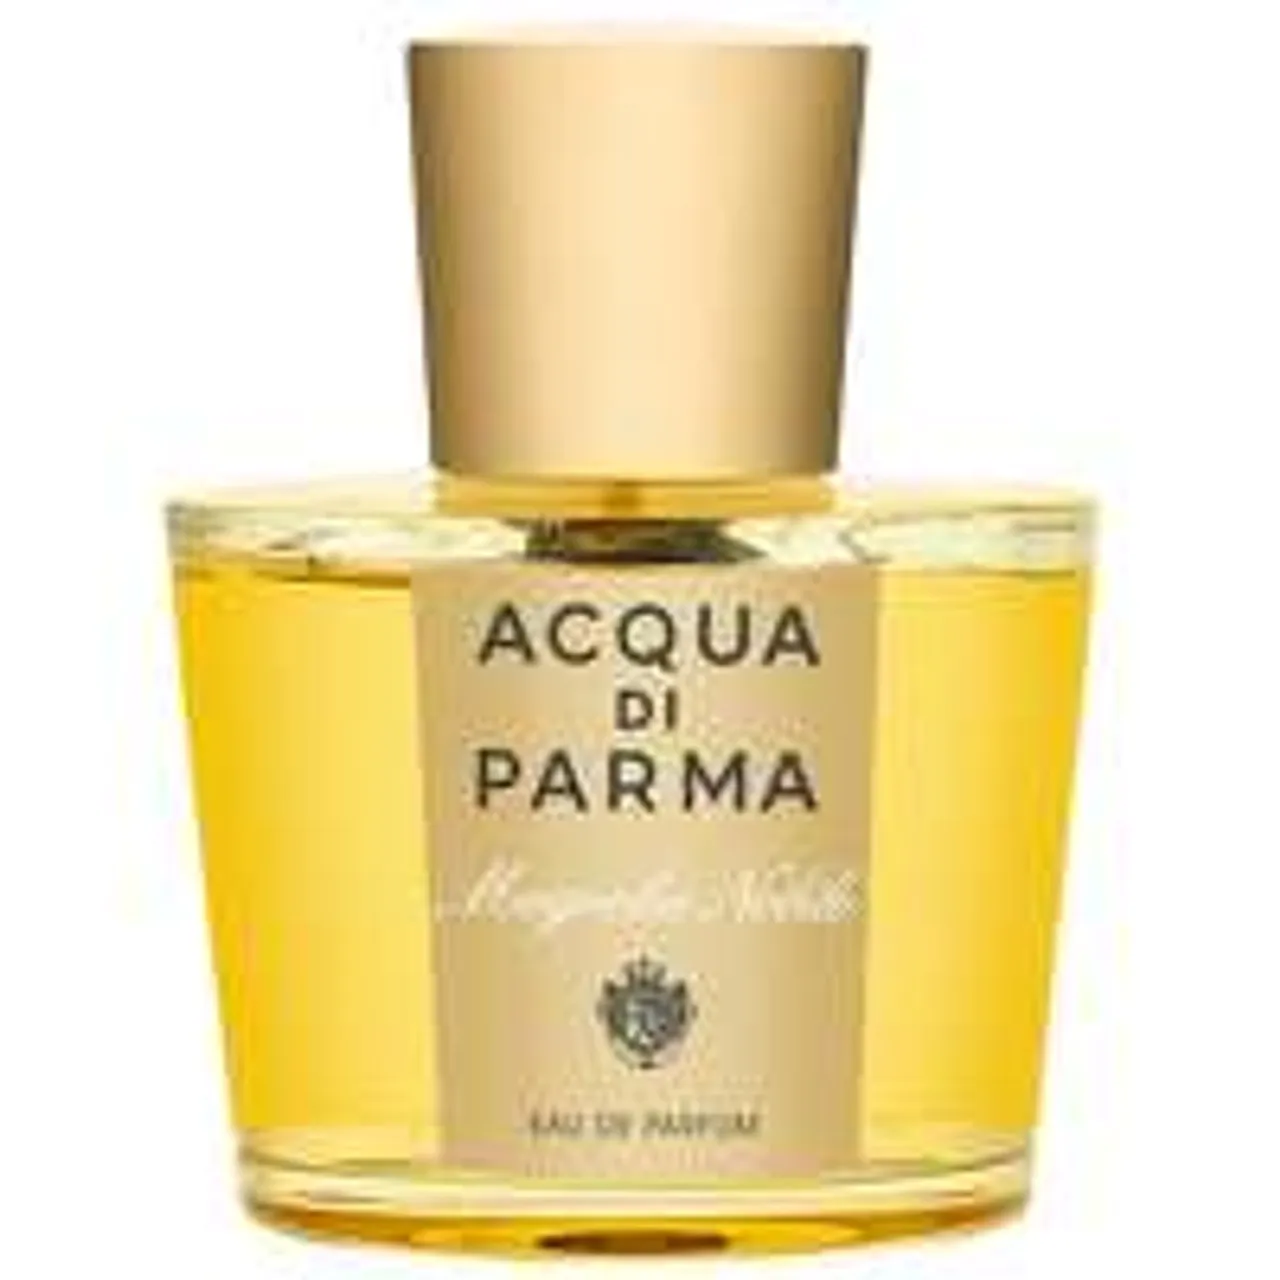 Acqua Di Parma Magnolia Nobile Eau de Parfum Natural Spray 100ml